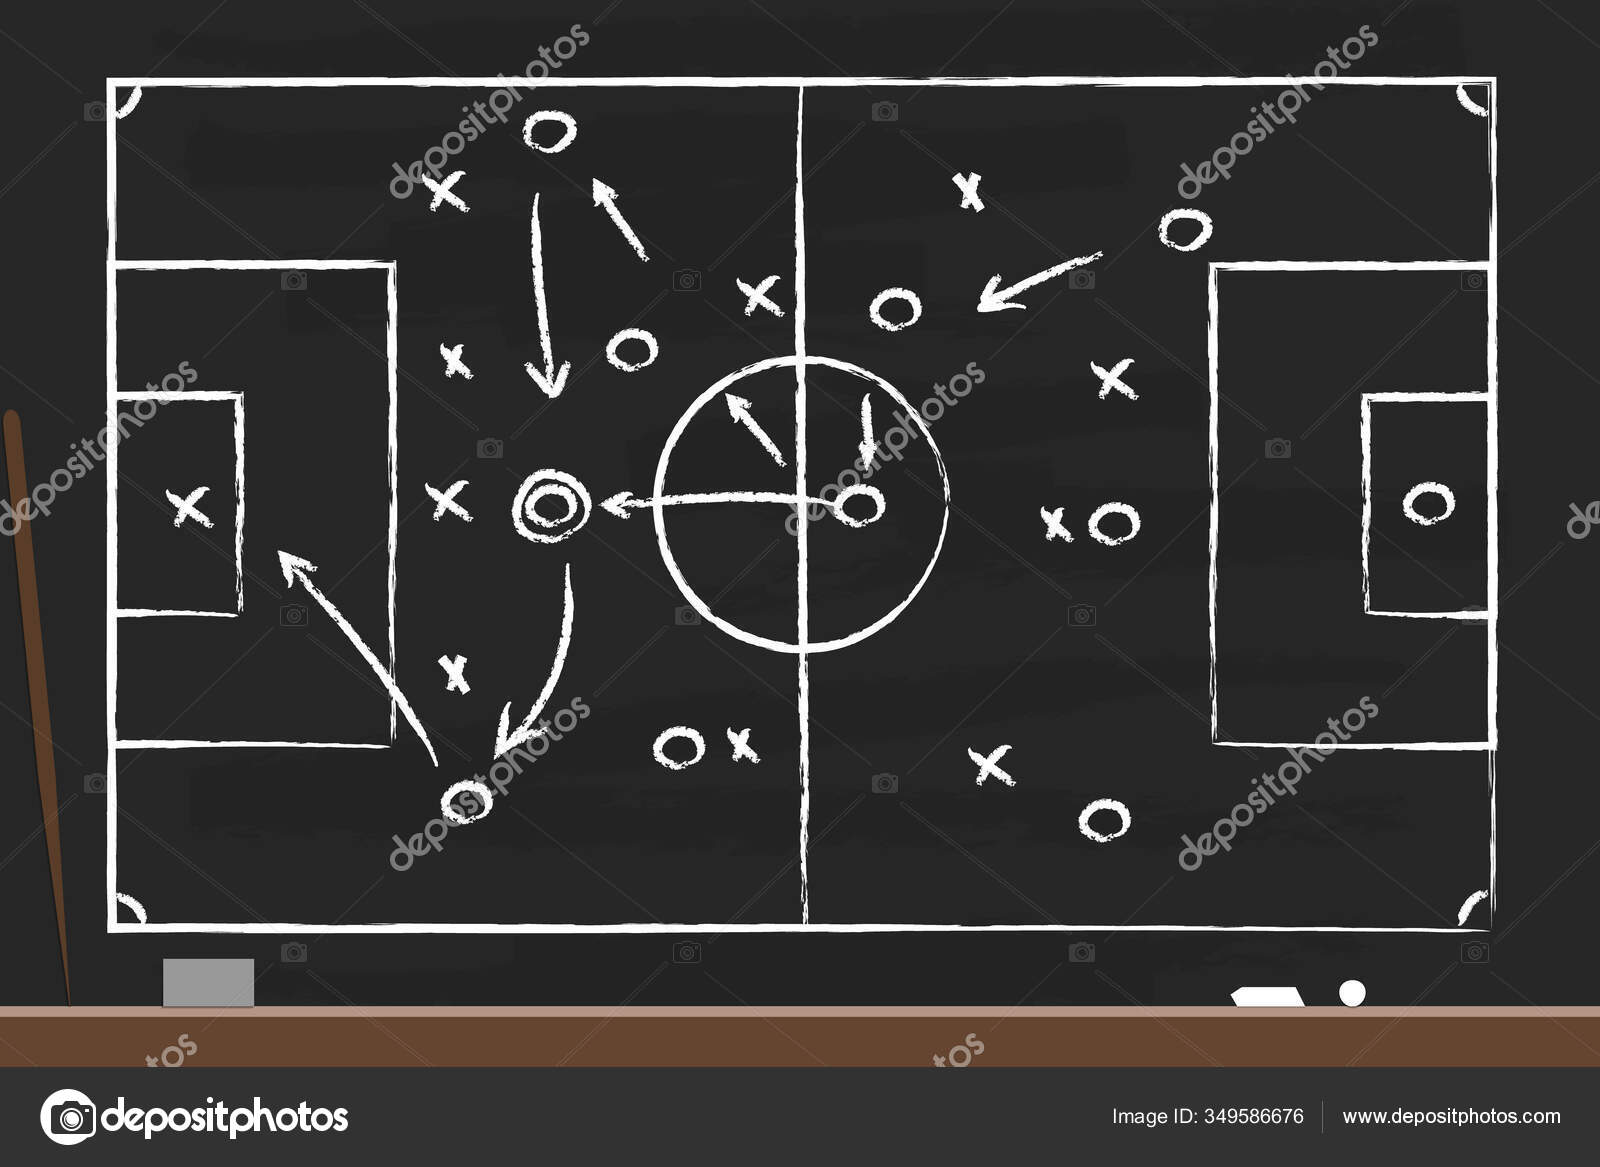 https://st3.depositphotos.com/32466374/34958/v/1600/depositphotos_349586676-stock-illustration-soccer-strategy-black-board-point.jpg